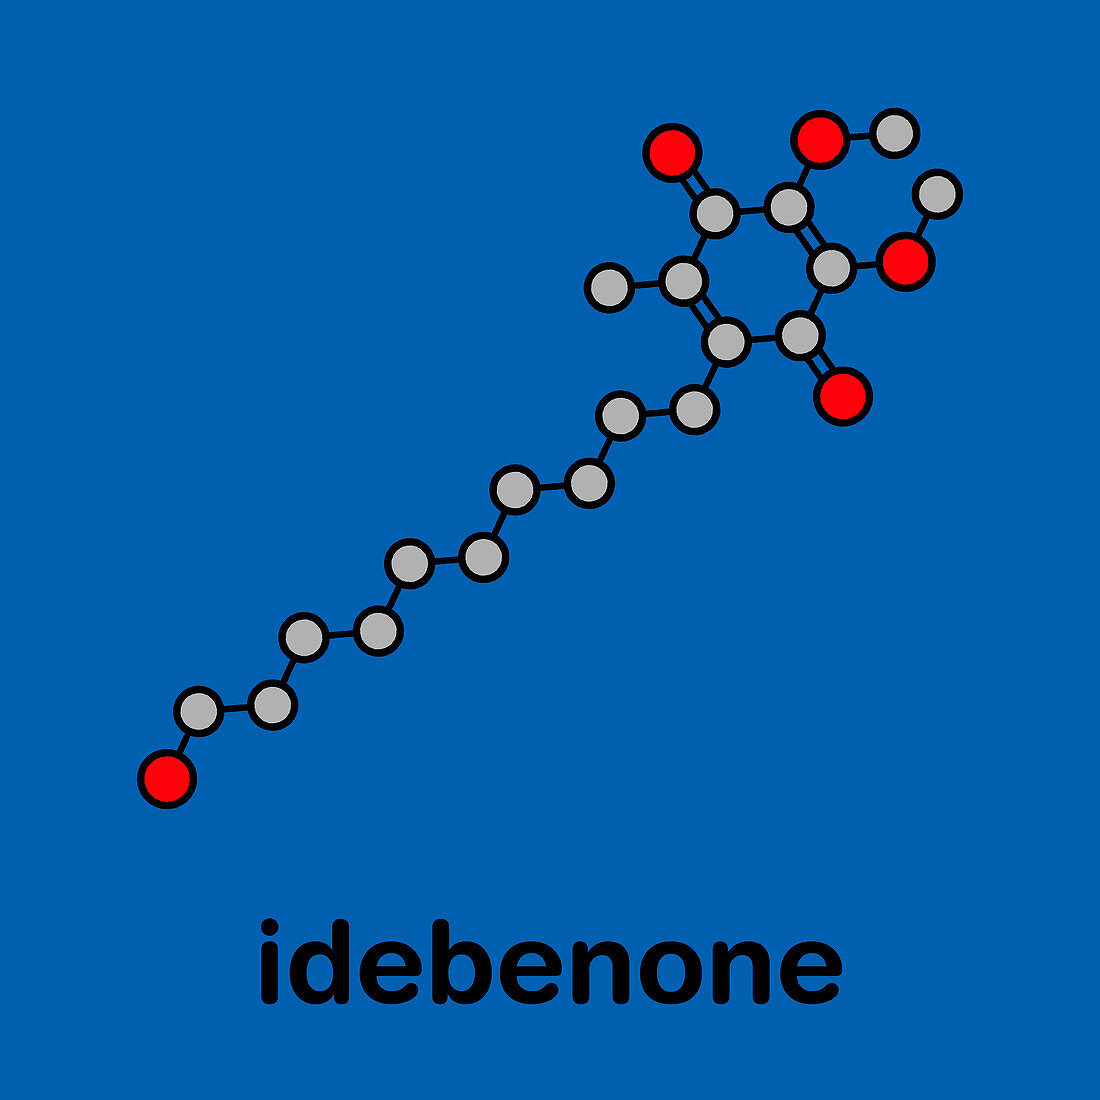 Idebenone drug, molecular model